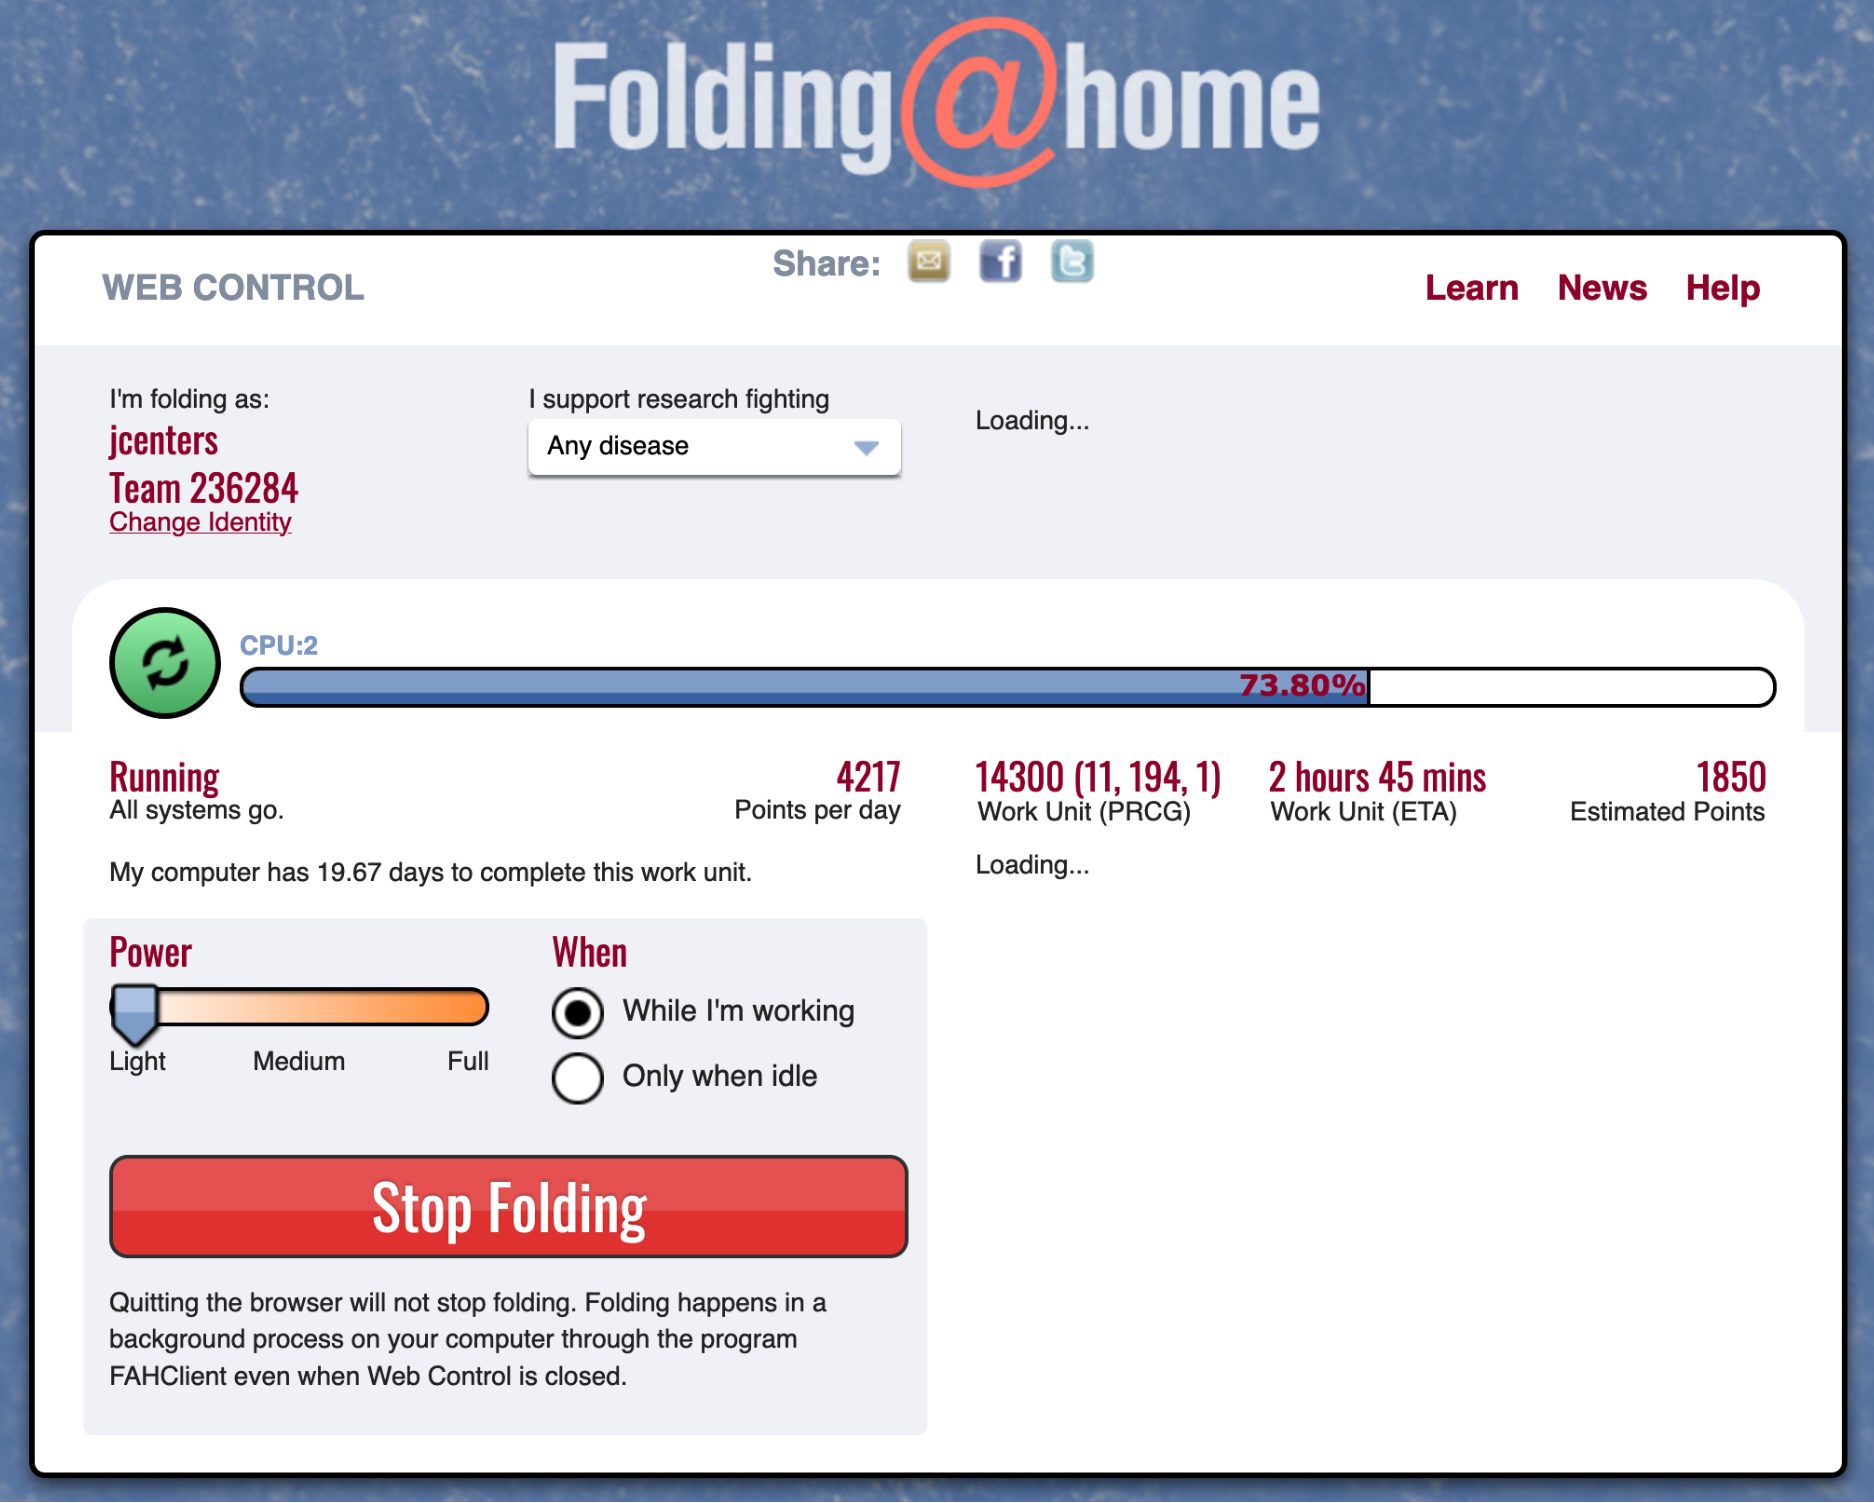 The Folding@home Web interface